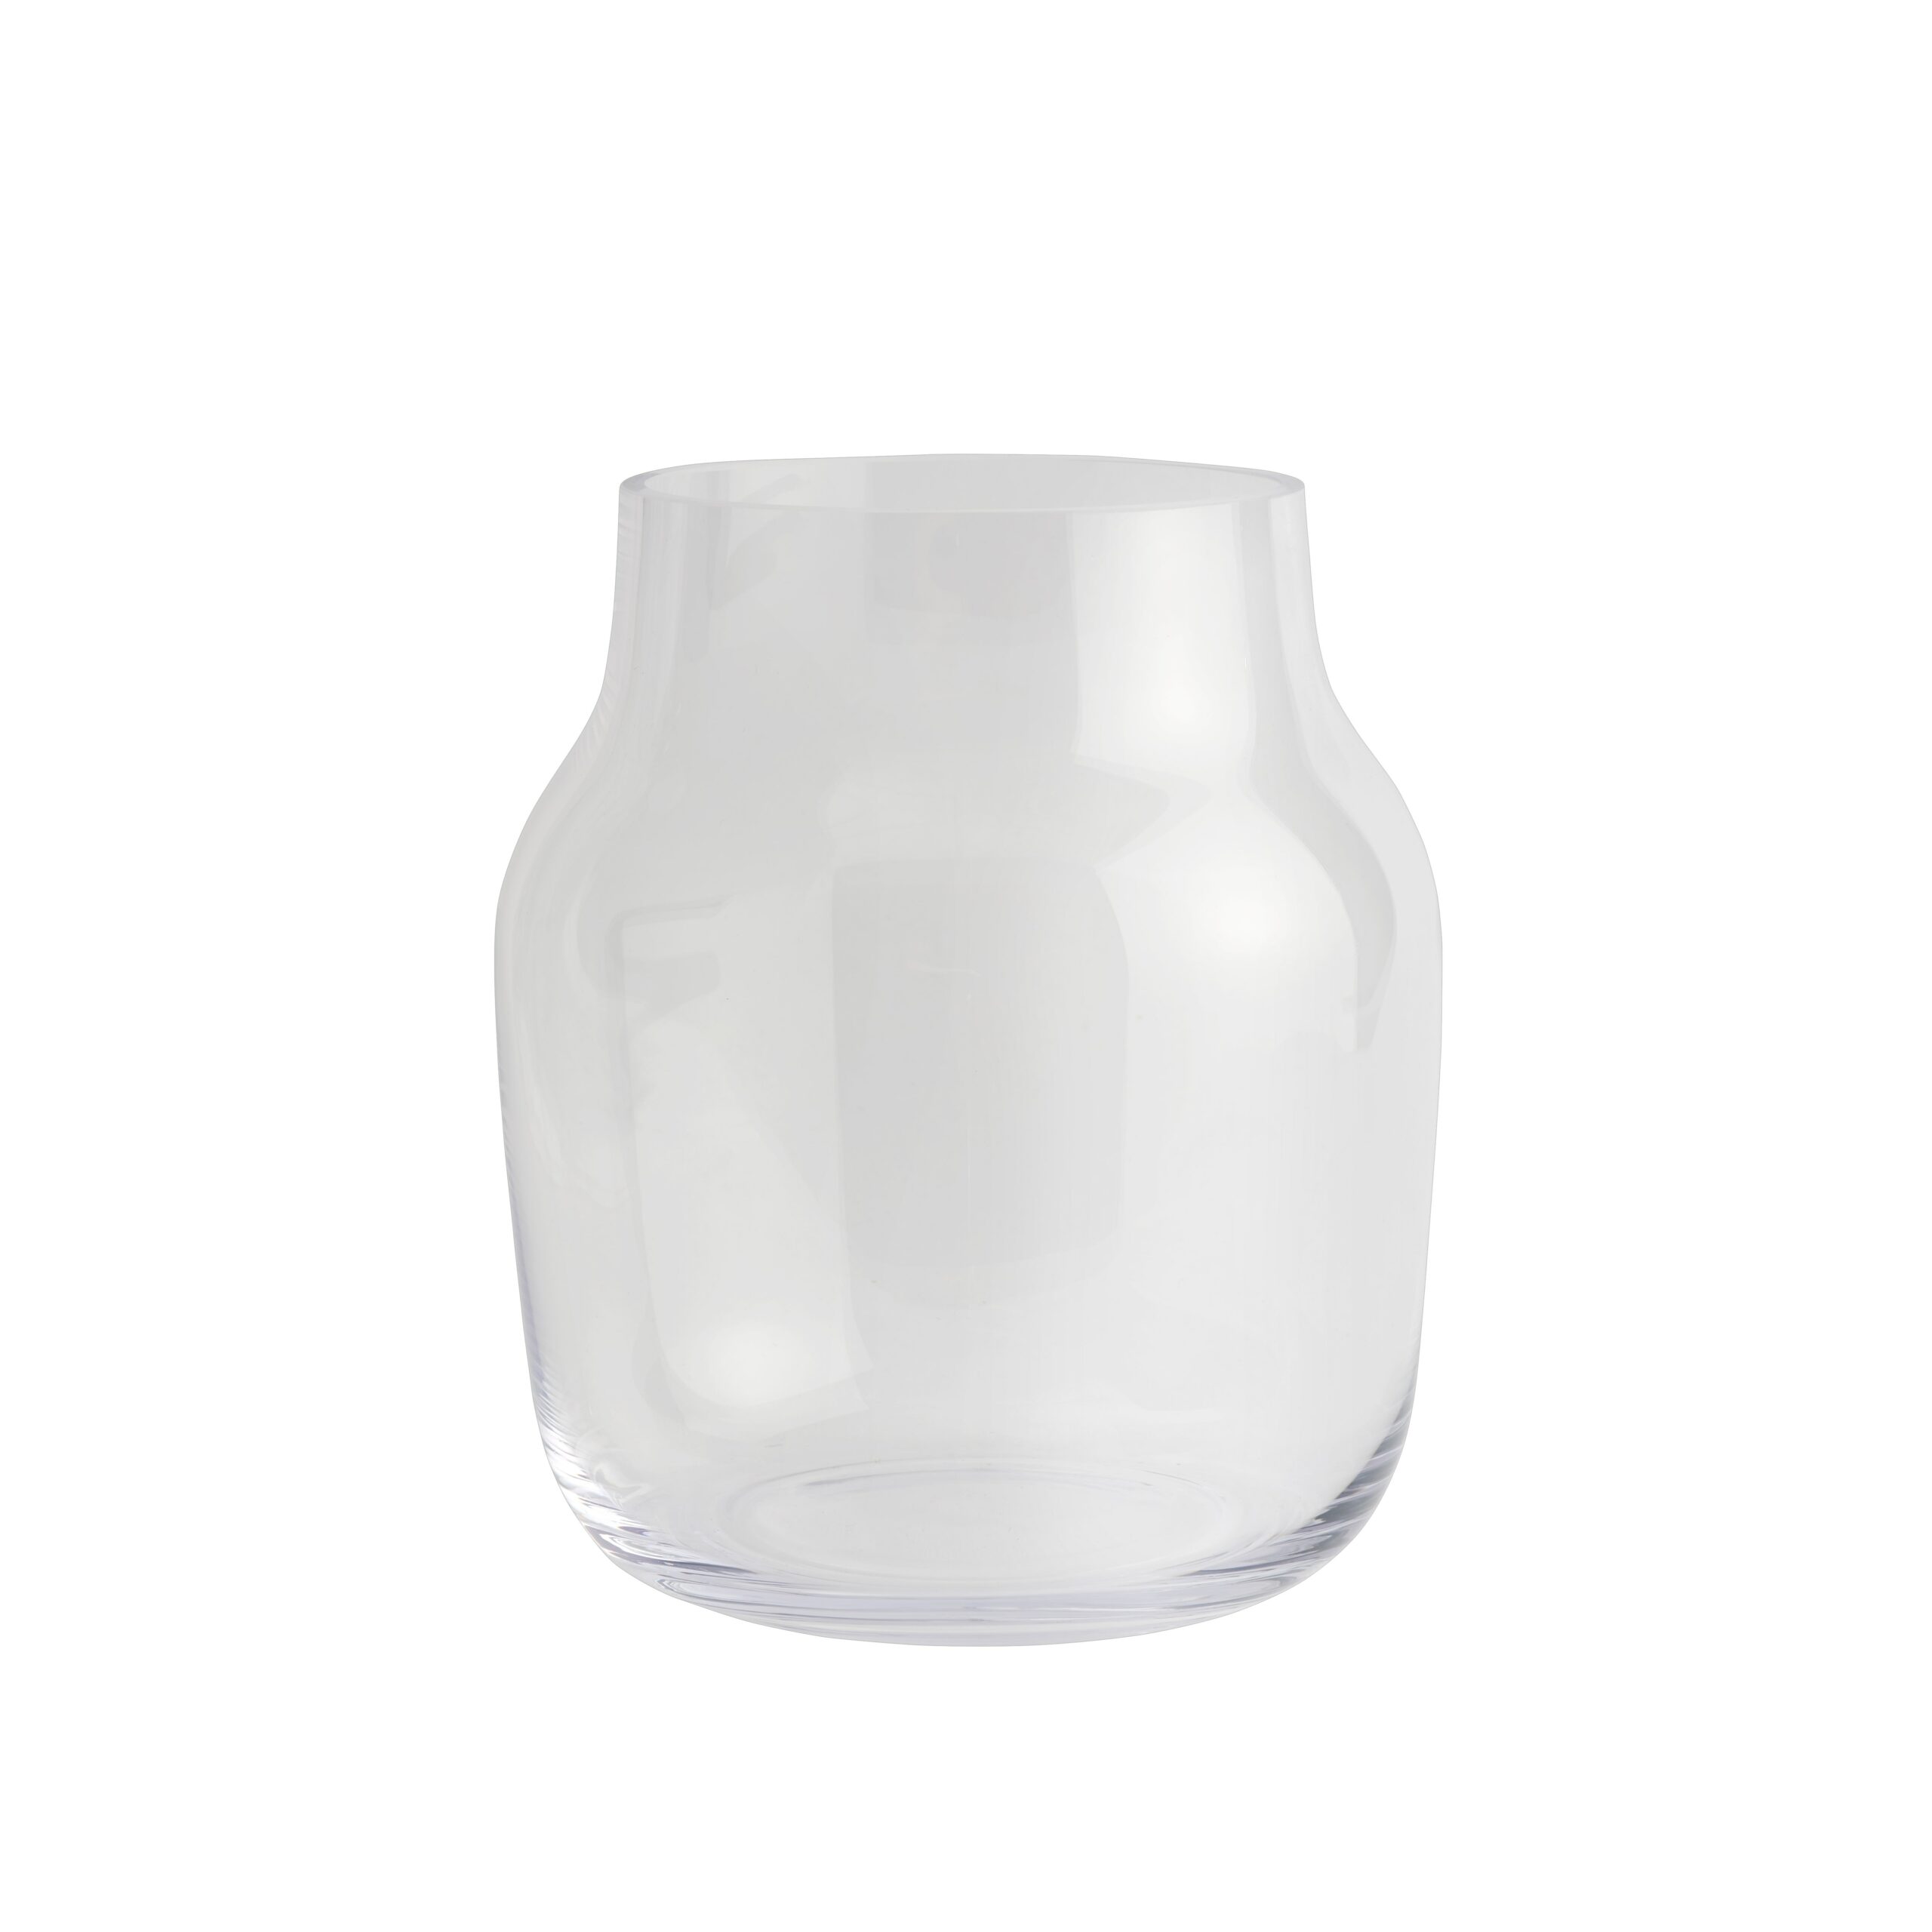 Silent-vase-20-clear-muuto-5000×5000-hi-res